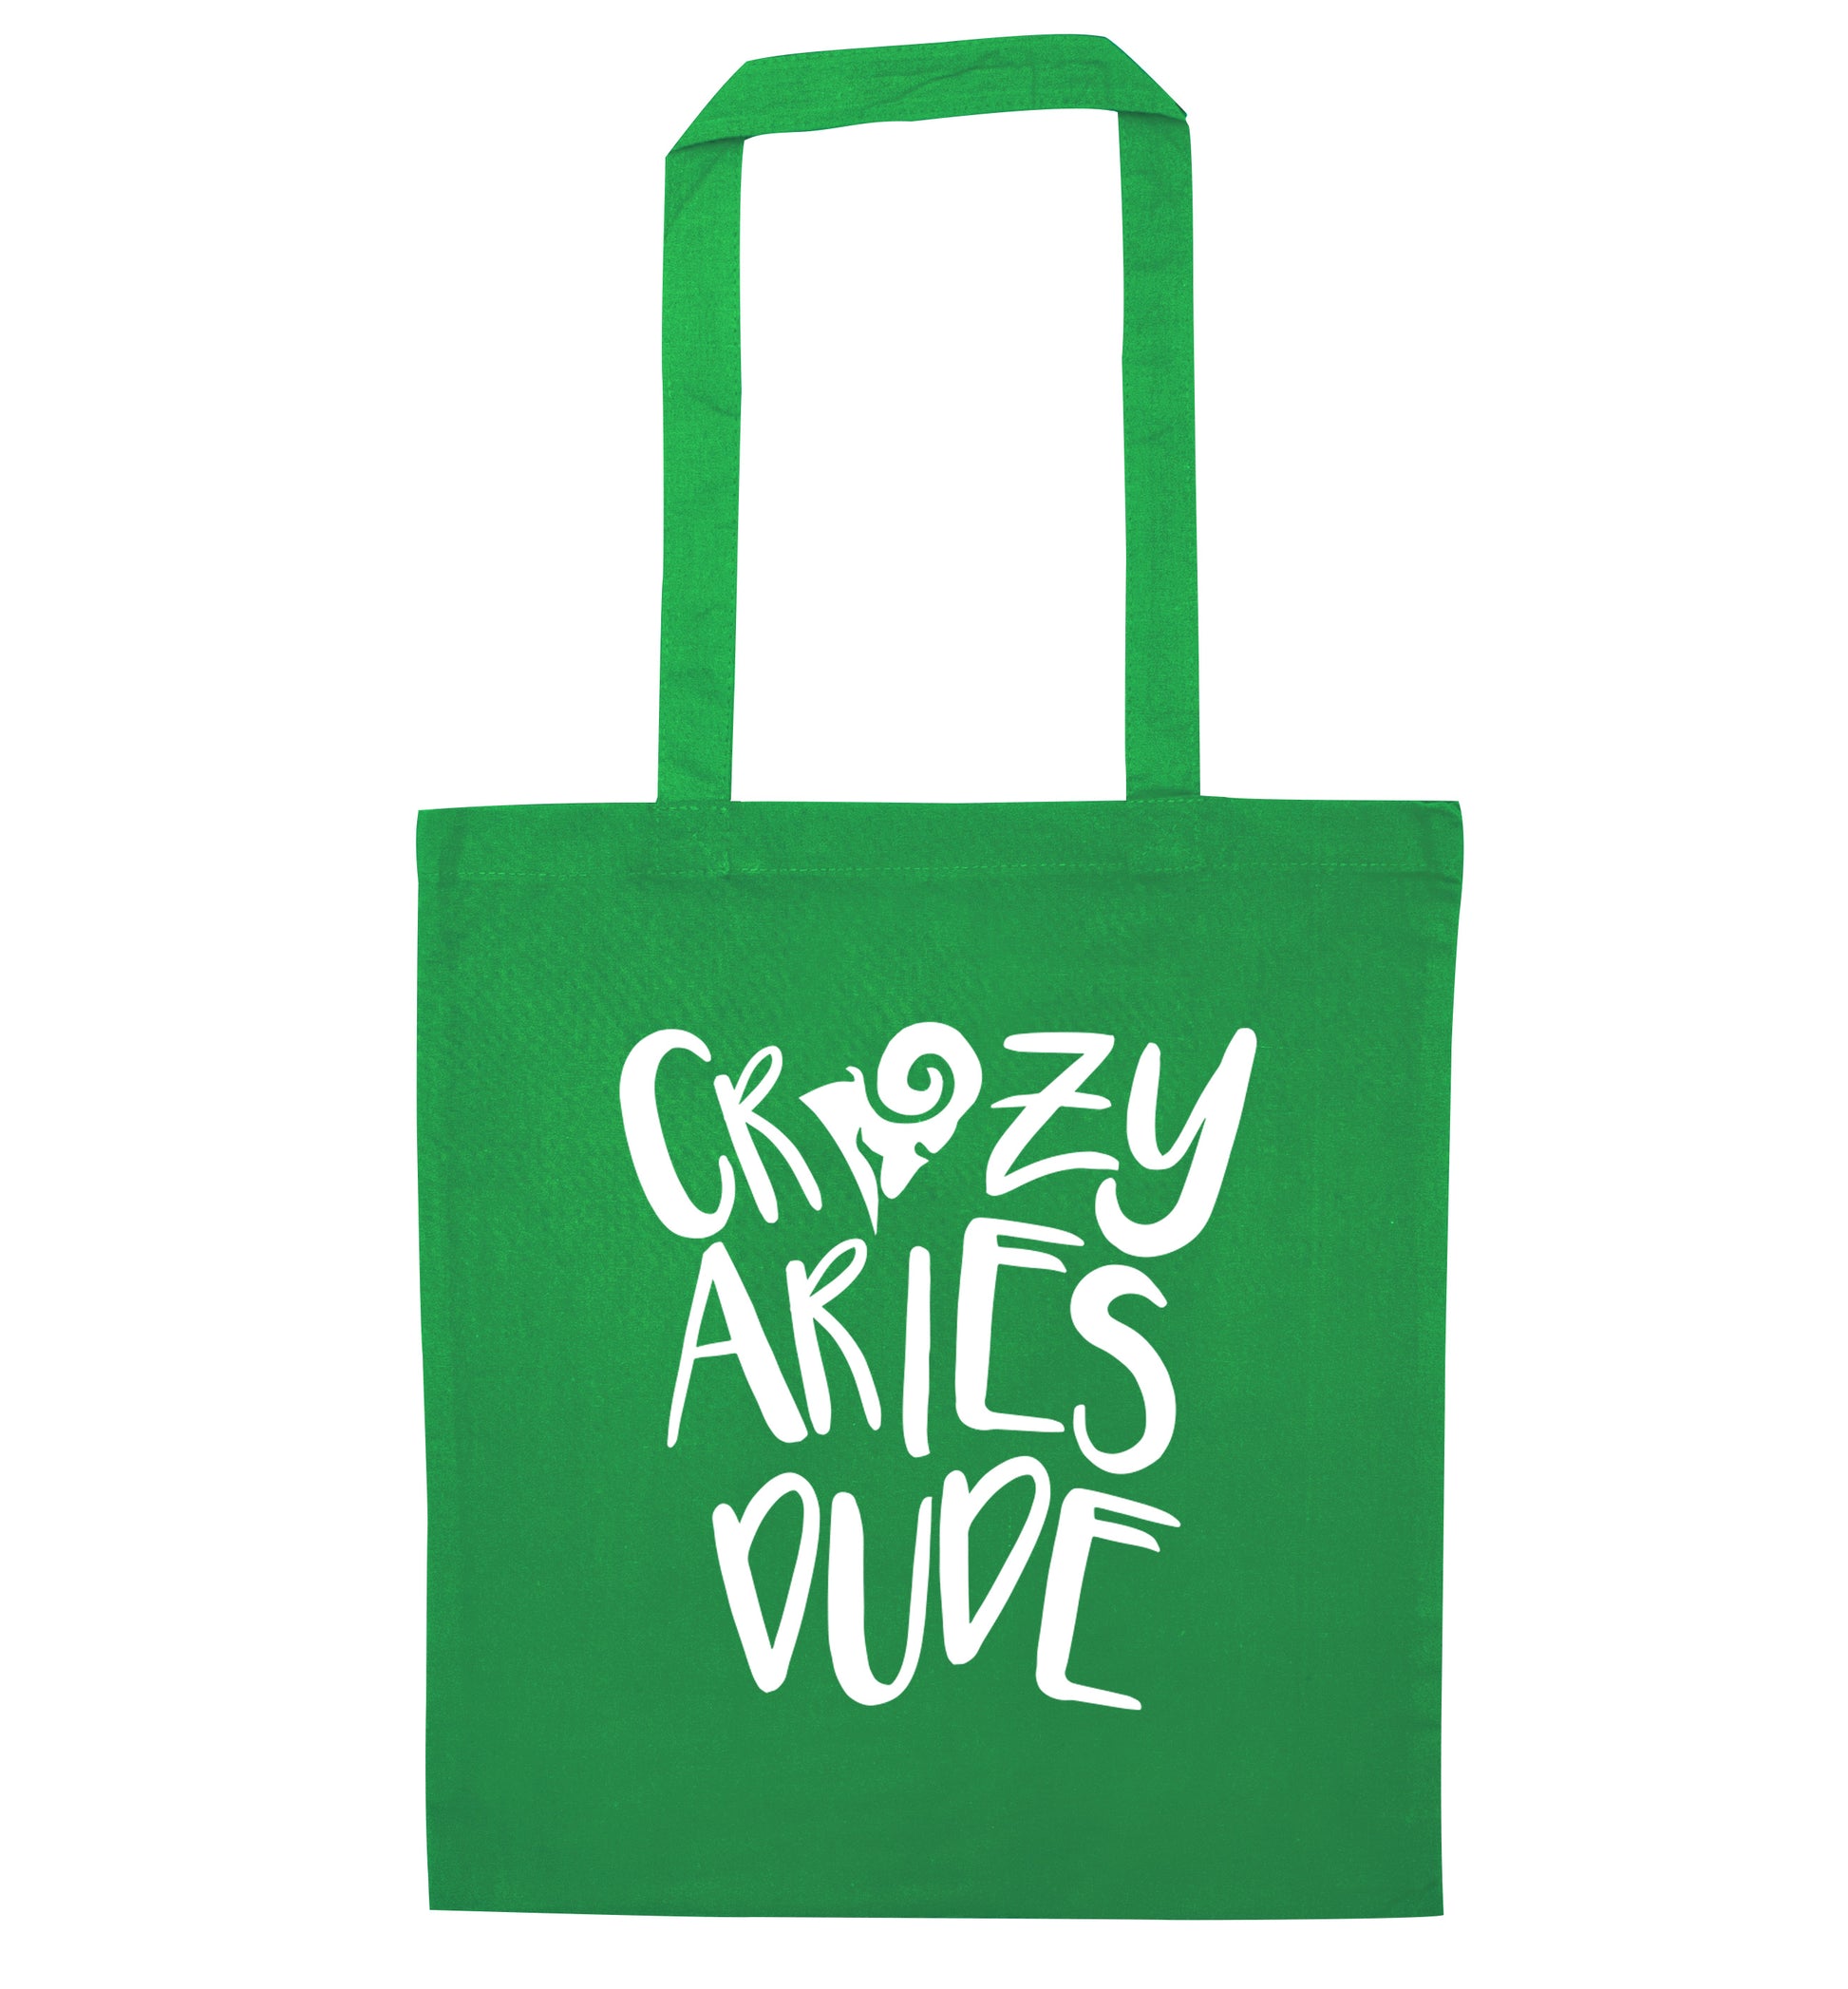 Crazy aries dude green tote bag